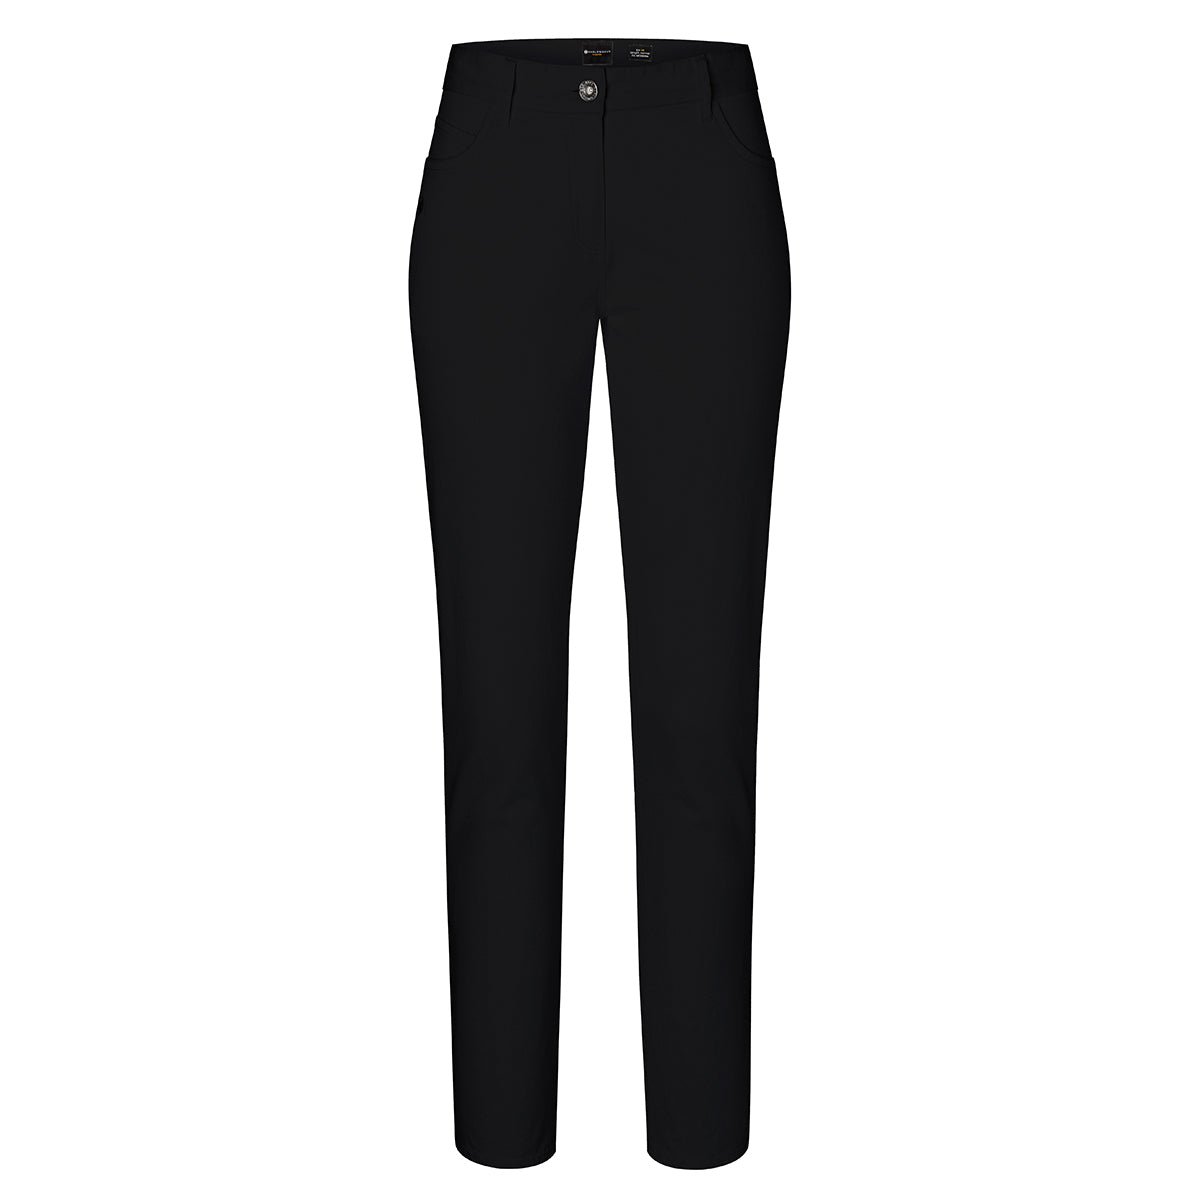 Karlowsky - 5-lomme bukser til damer - Sort - Størrelse: 52